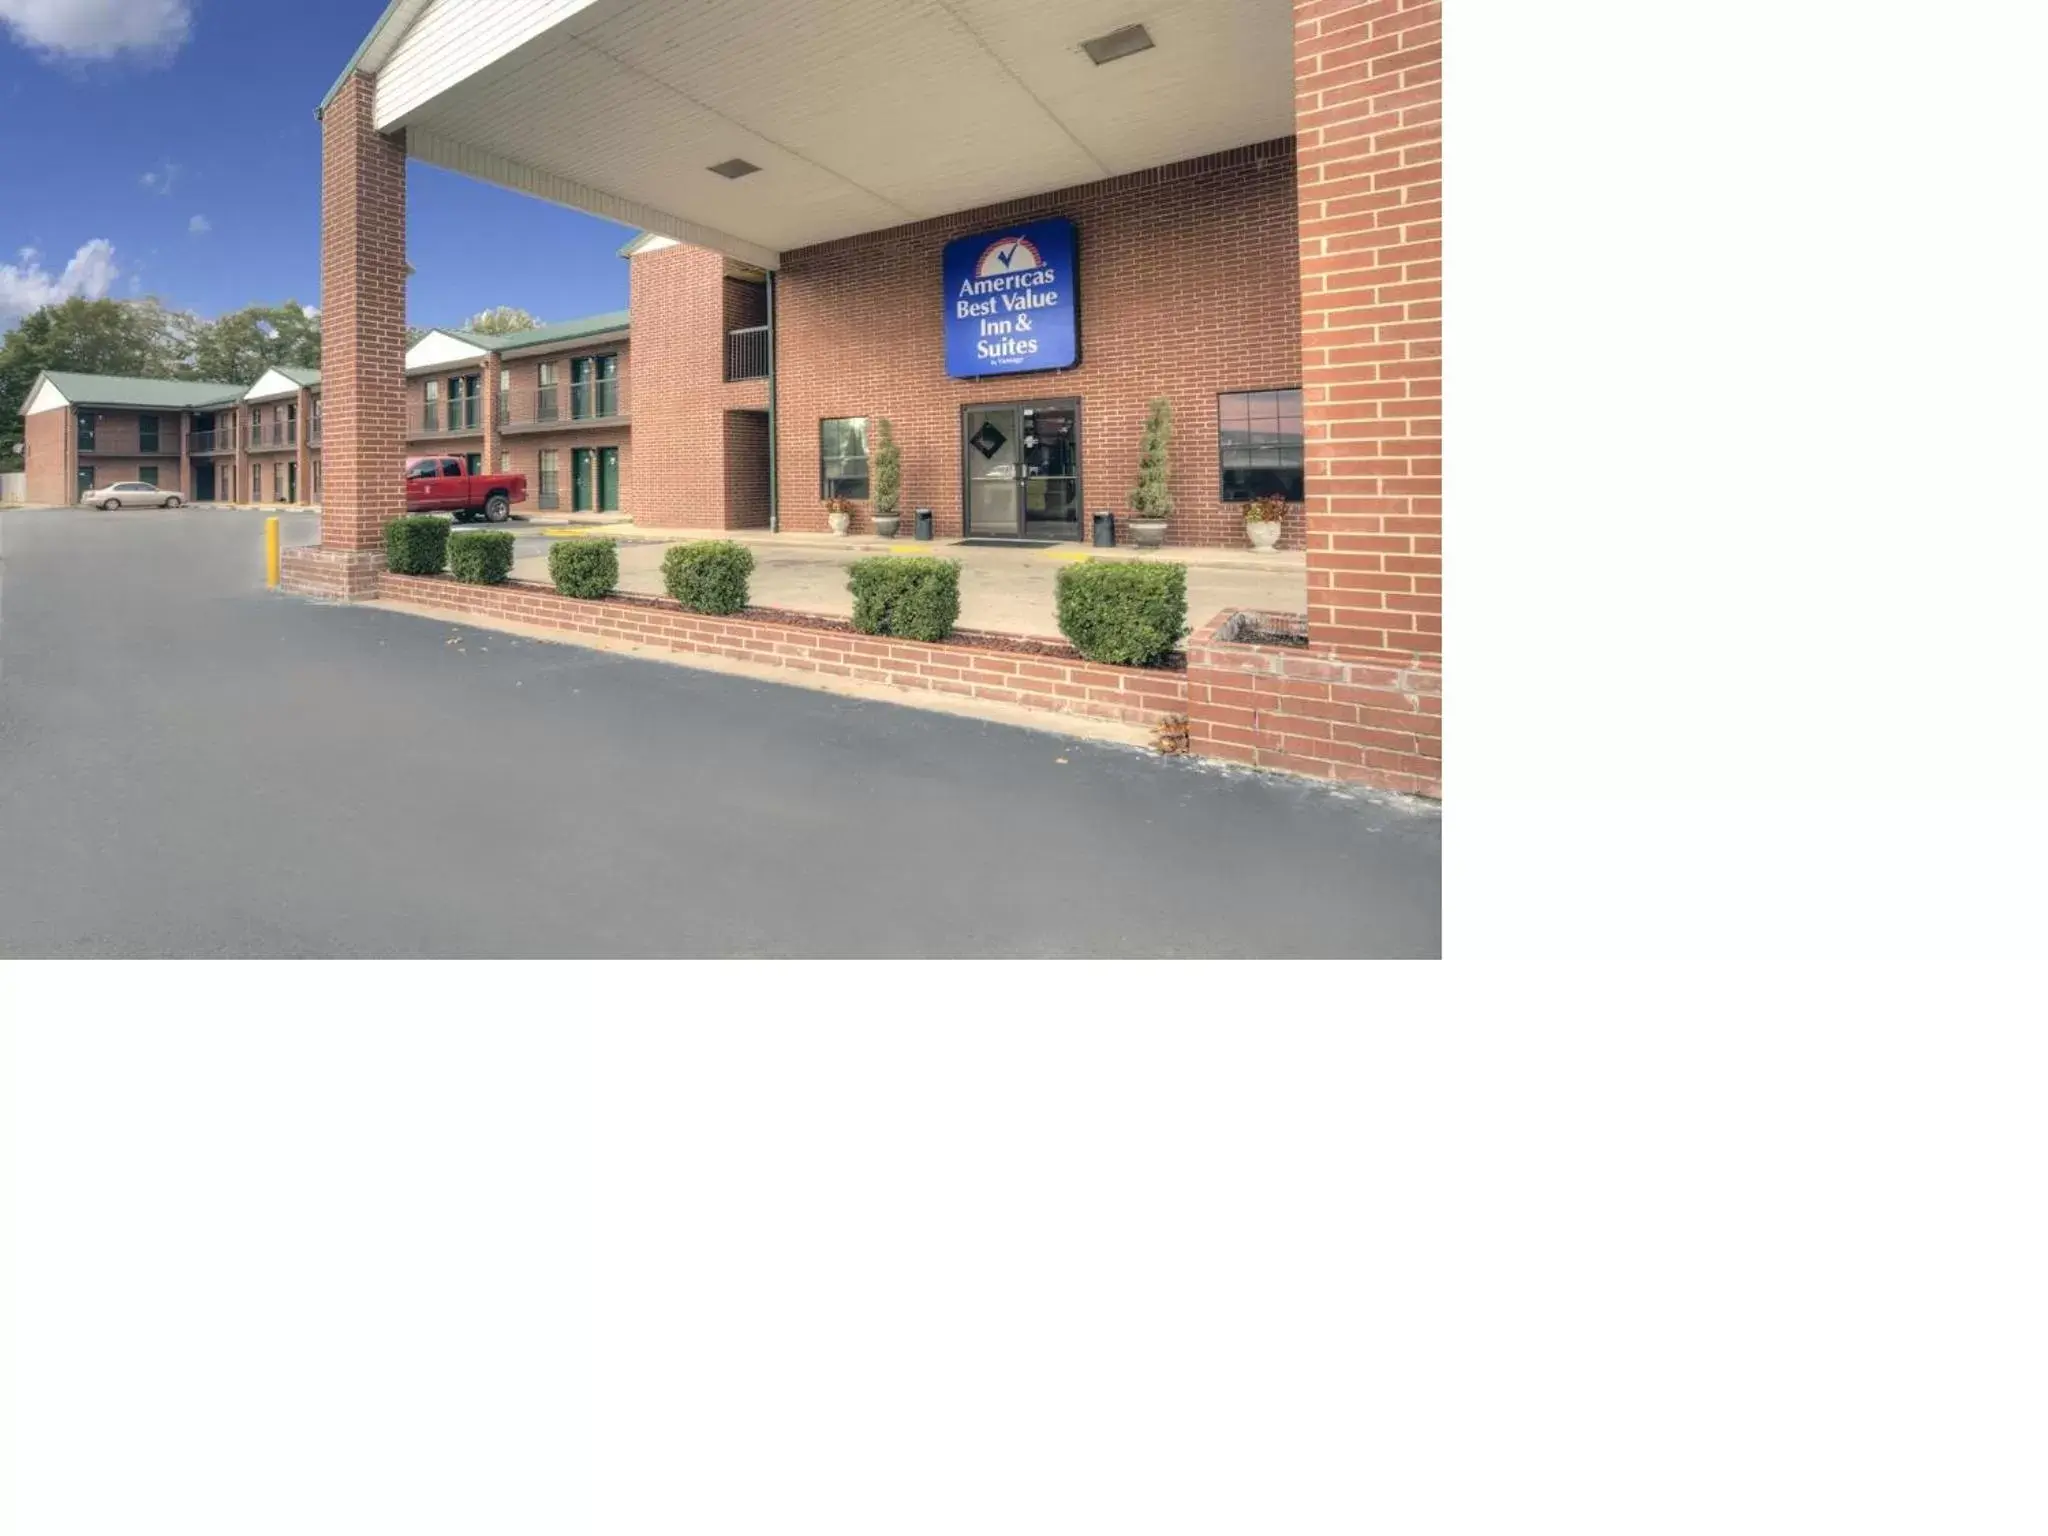 Facade/Entrance in Americas Best Value Inn & Suites - Little Rock - Maumelle